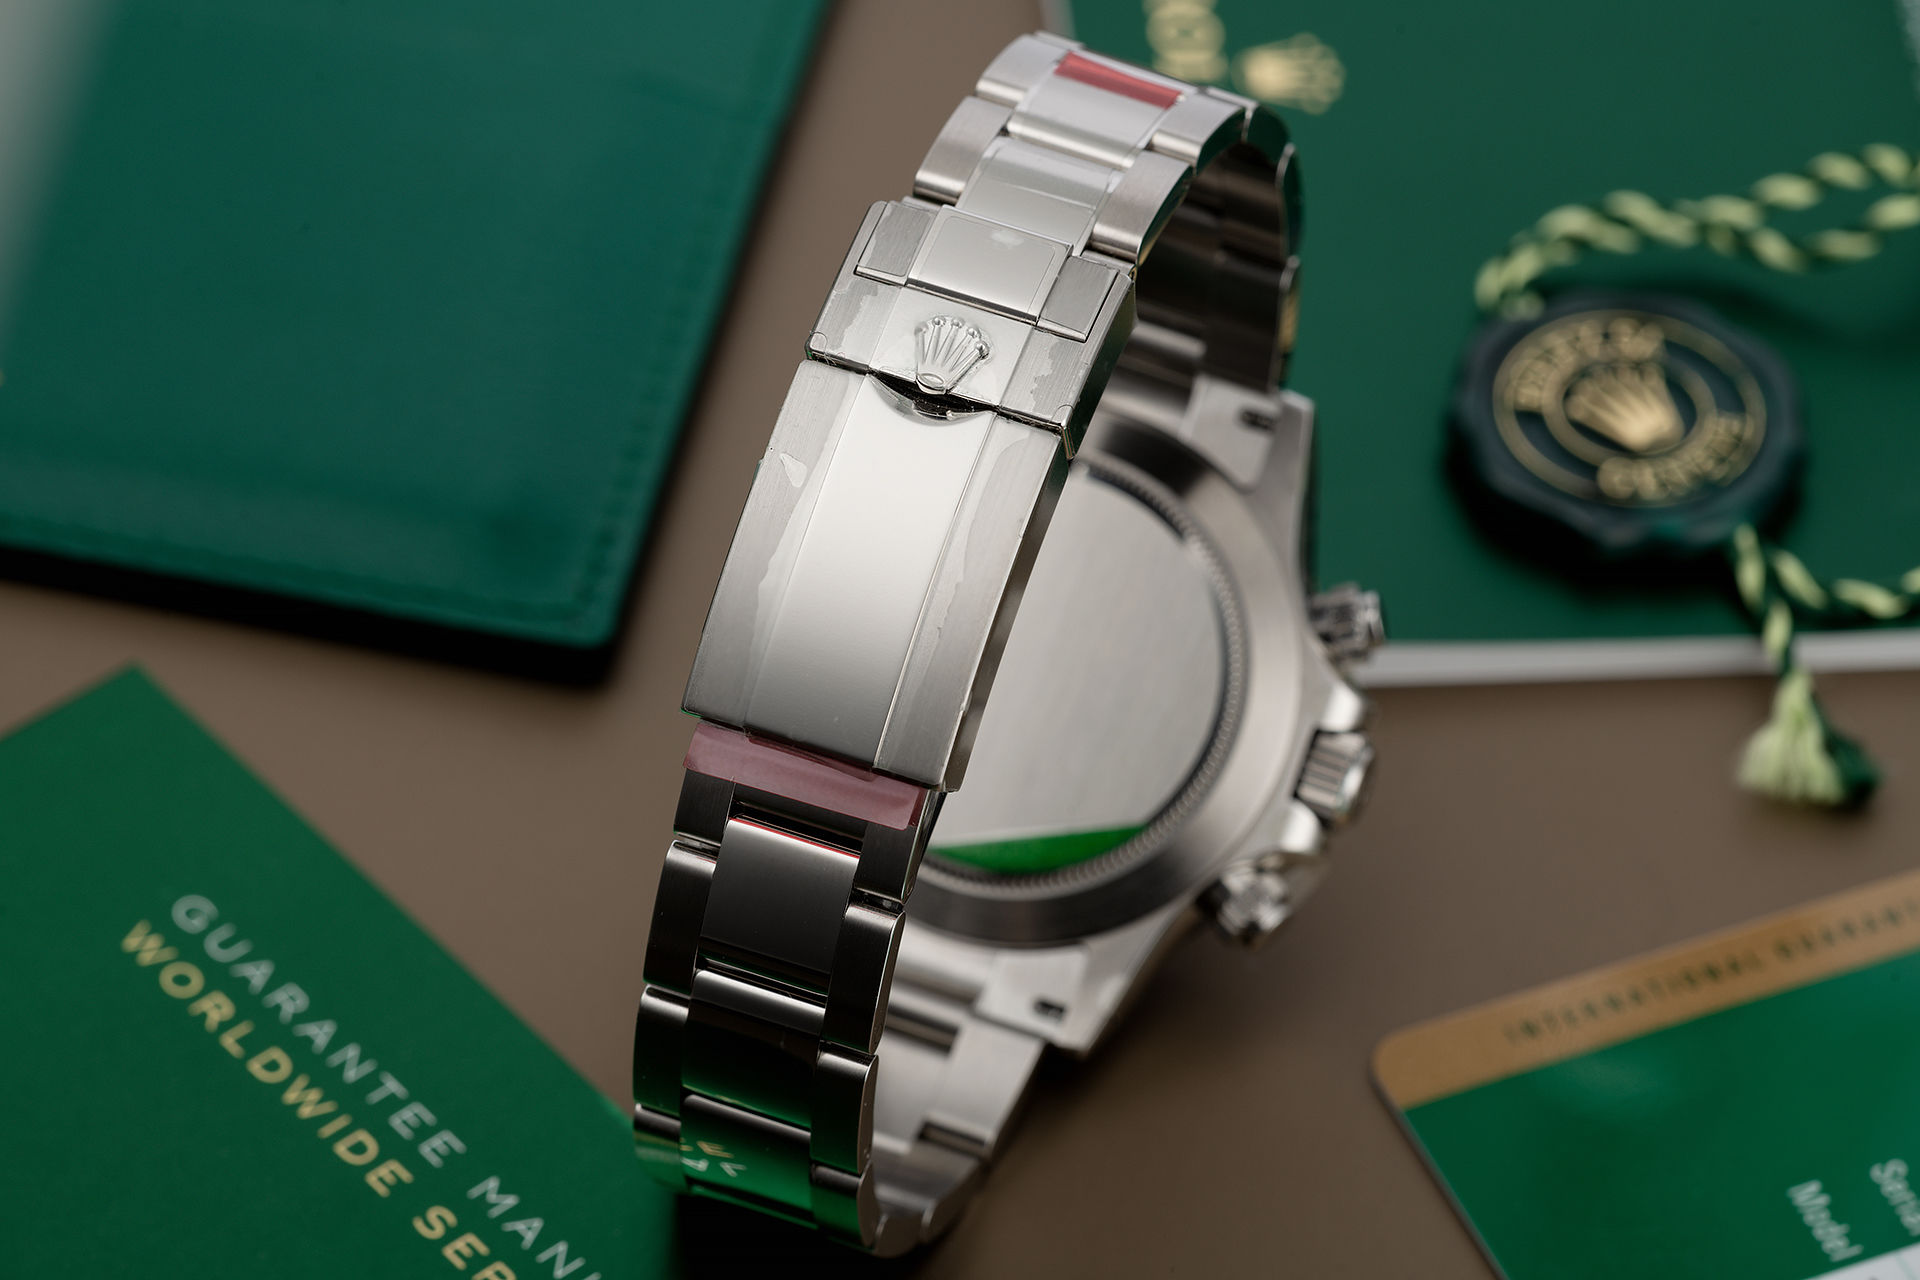 ref 116500LN | Complete Set 'Five Year Warranty' | Rolex Cosmograph Daytona